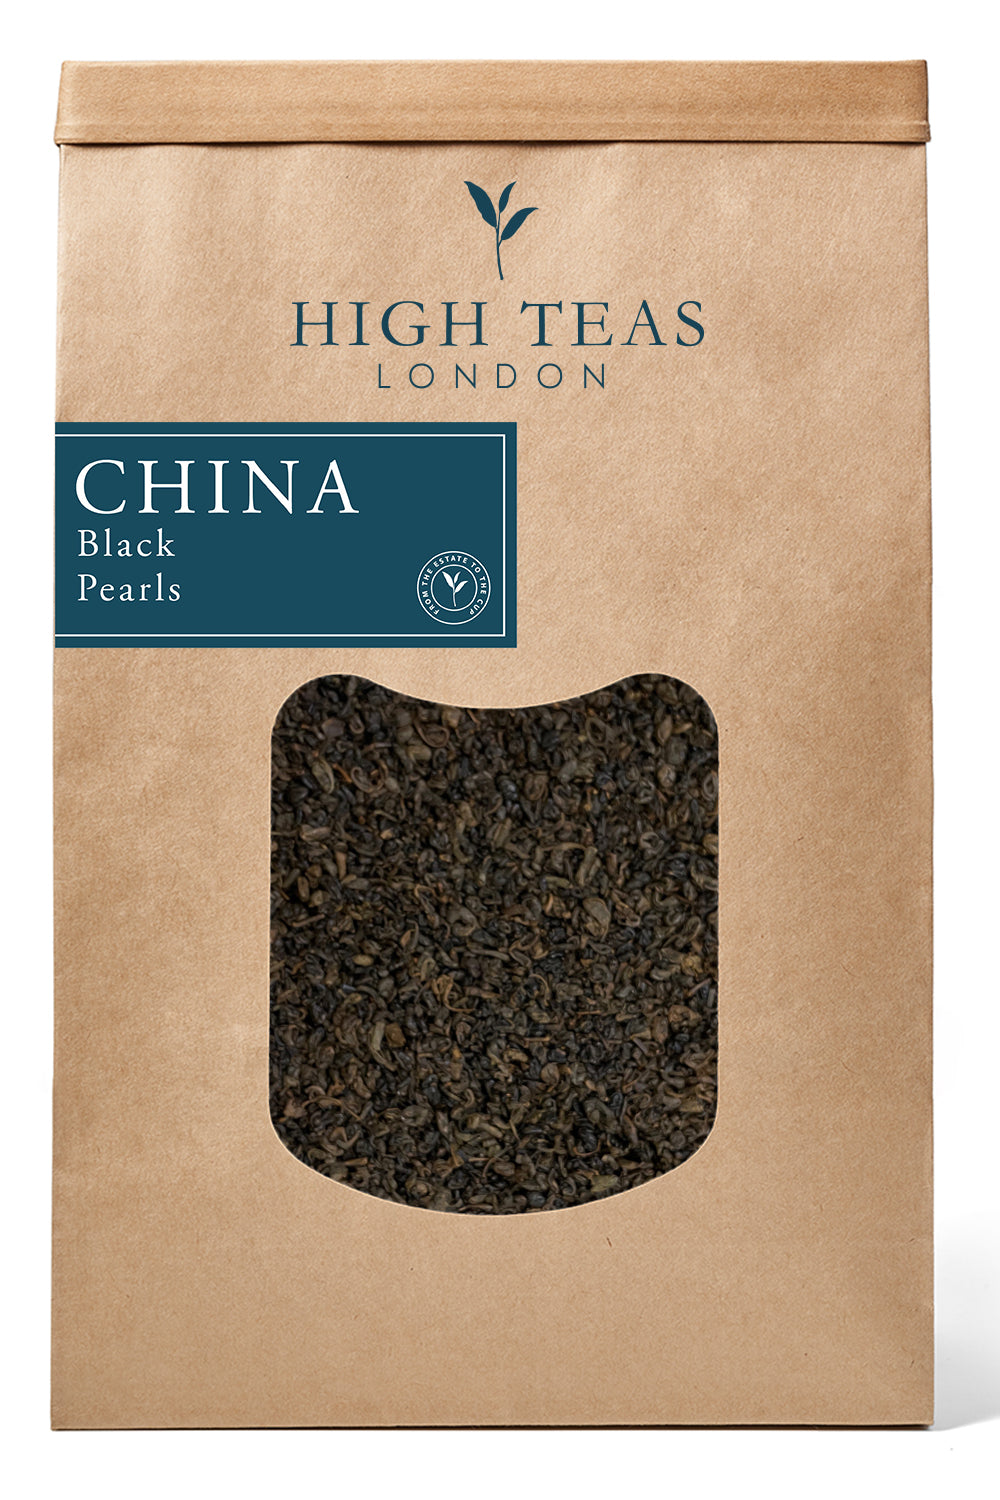 China - Black Pearls aka Black Gunpowder-500g-Loose Leaf Tea-High Teas